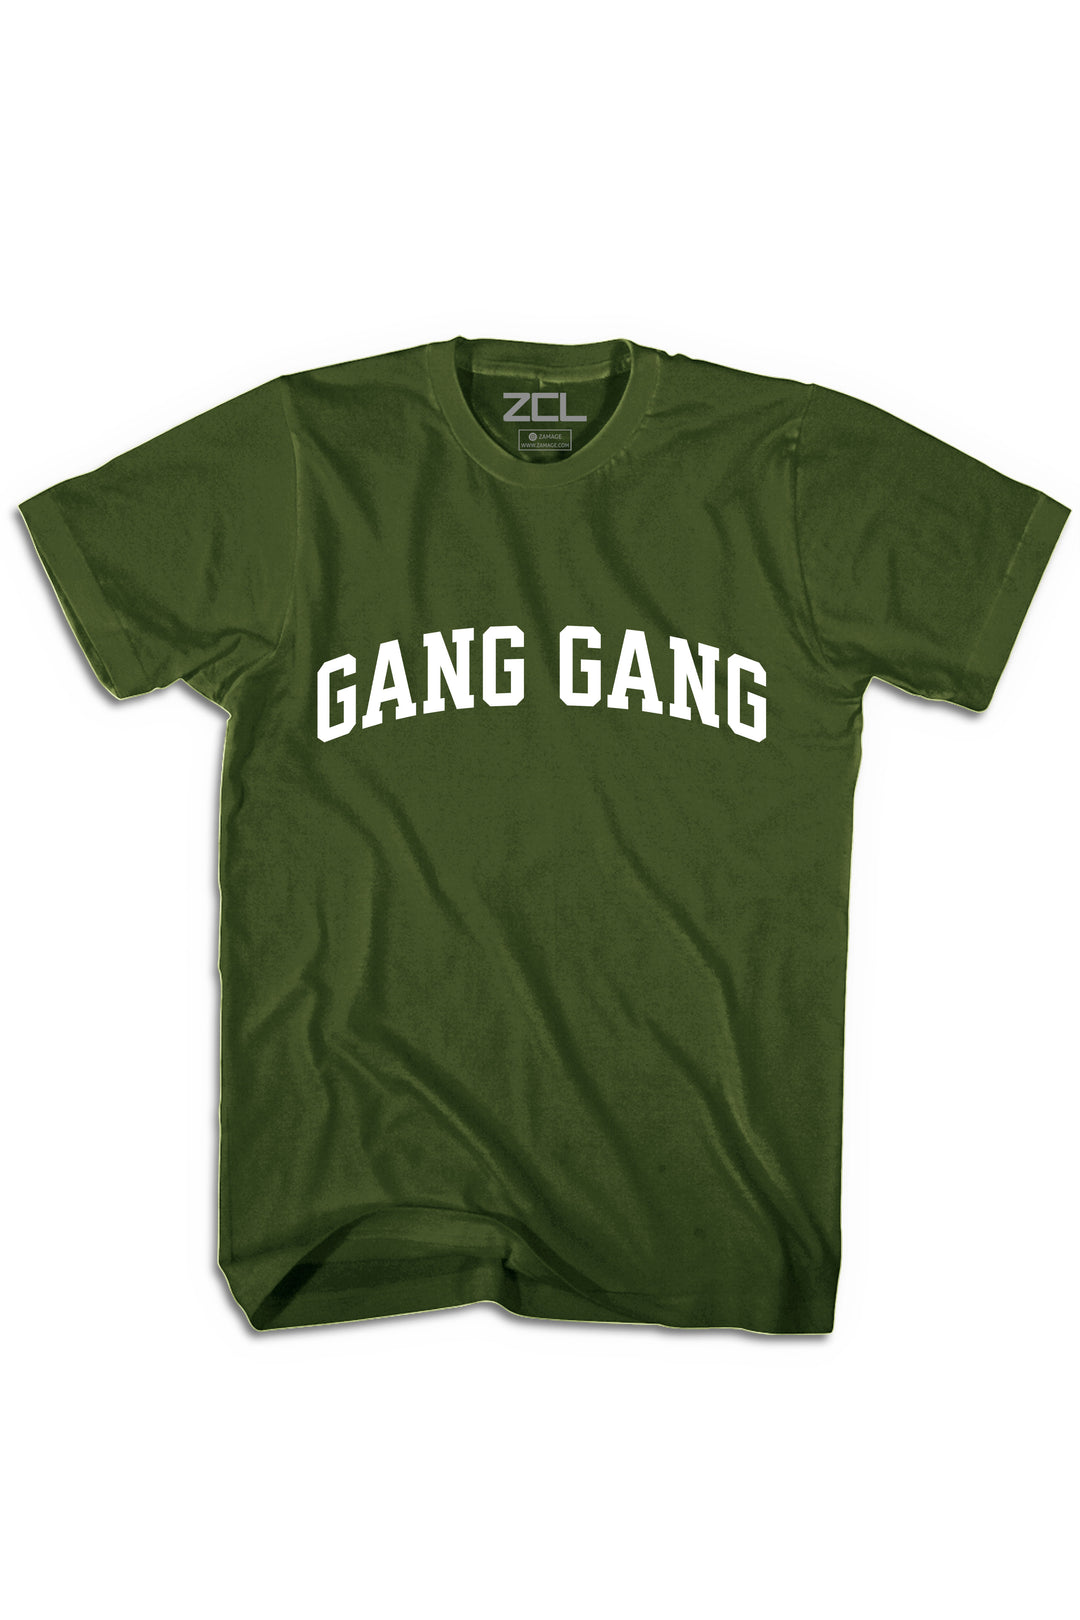 Gang Gang Tee (White Logo) – Zamage